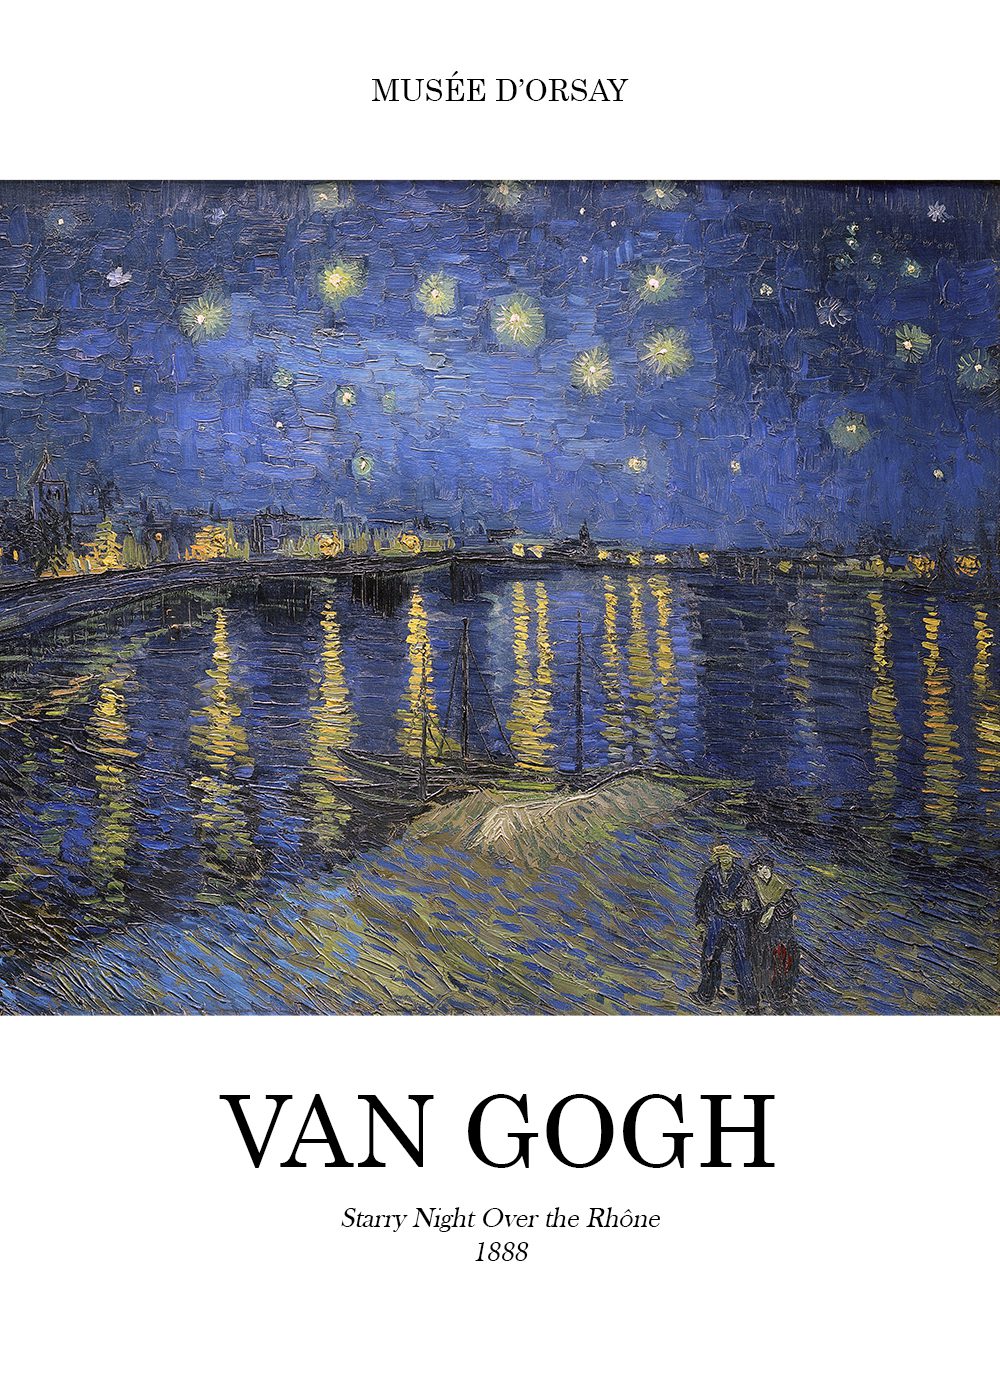 Starry Night Over the Rhone van Gogh Poster